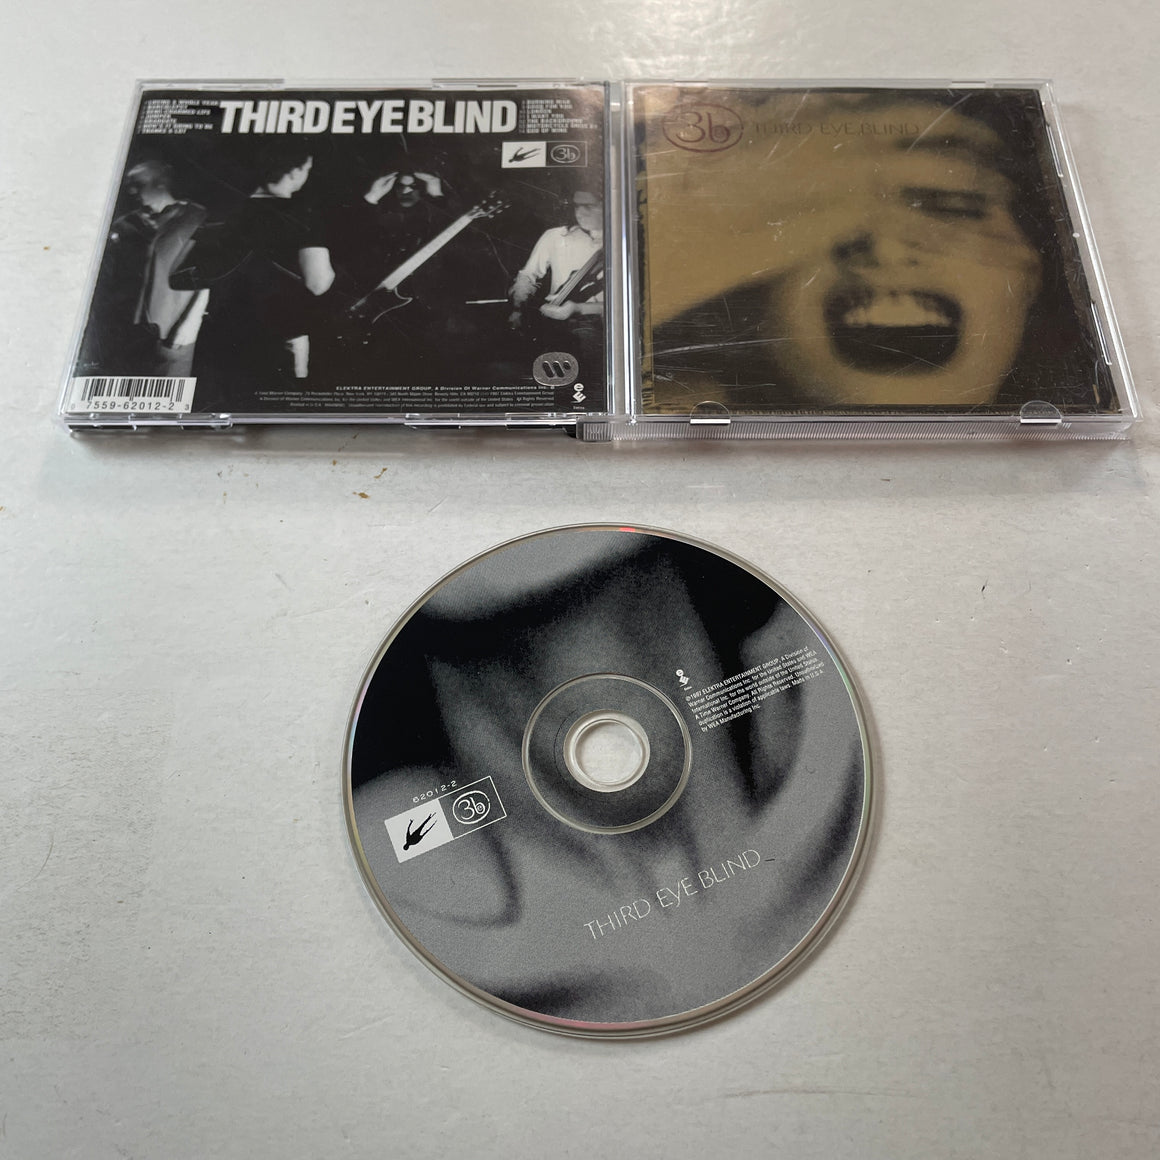 Third Eye Blind Third Eye Blind Used CD VG+\VG+